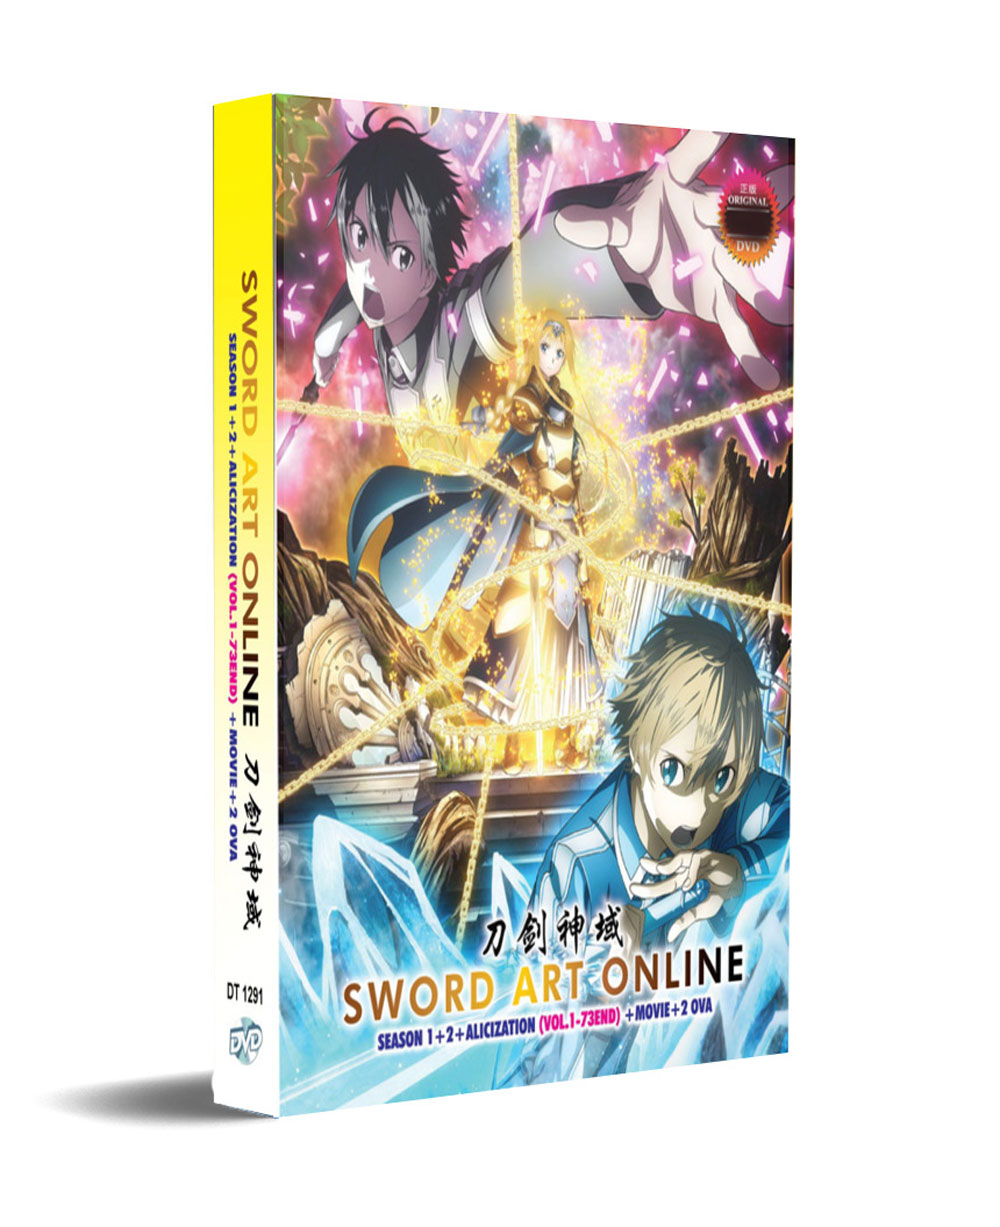 Sword Art Online Season 1+2+Alicization + Movie + 2 OVA (DVD) (2012-2018) 动画